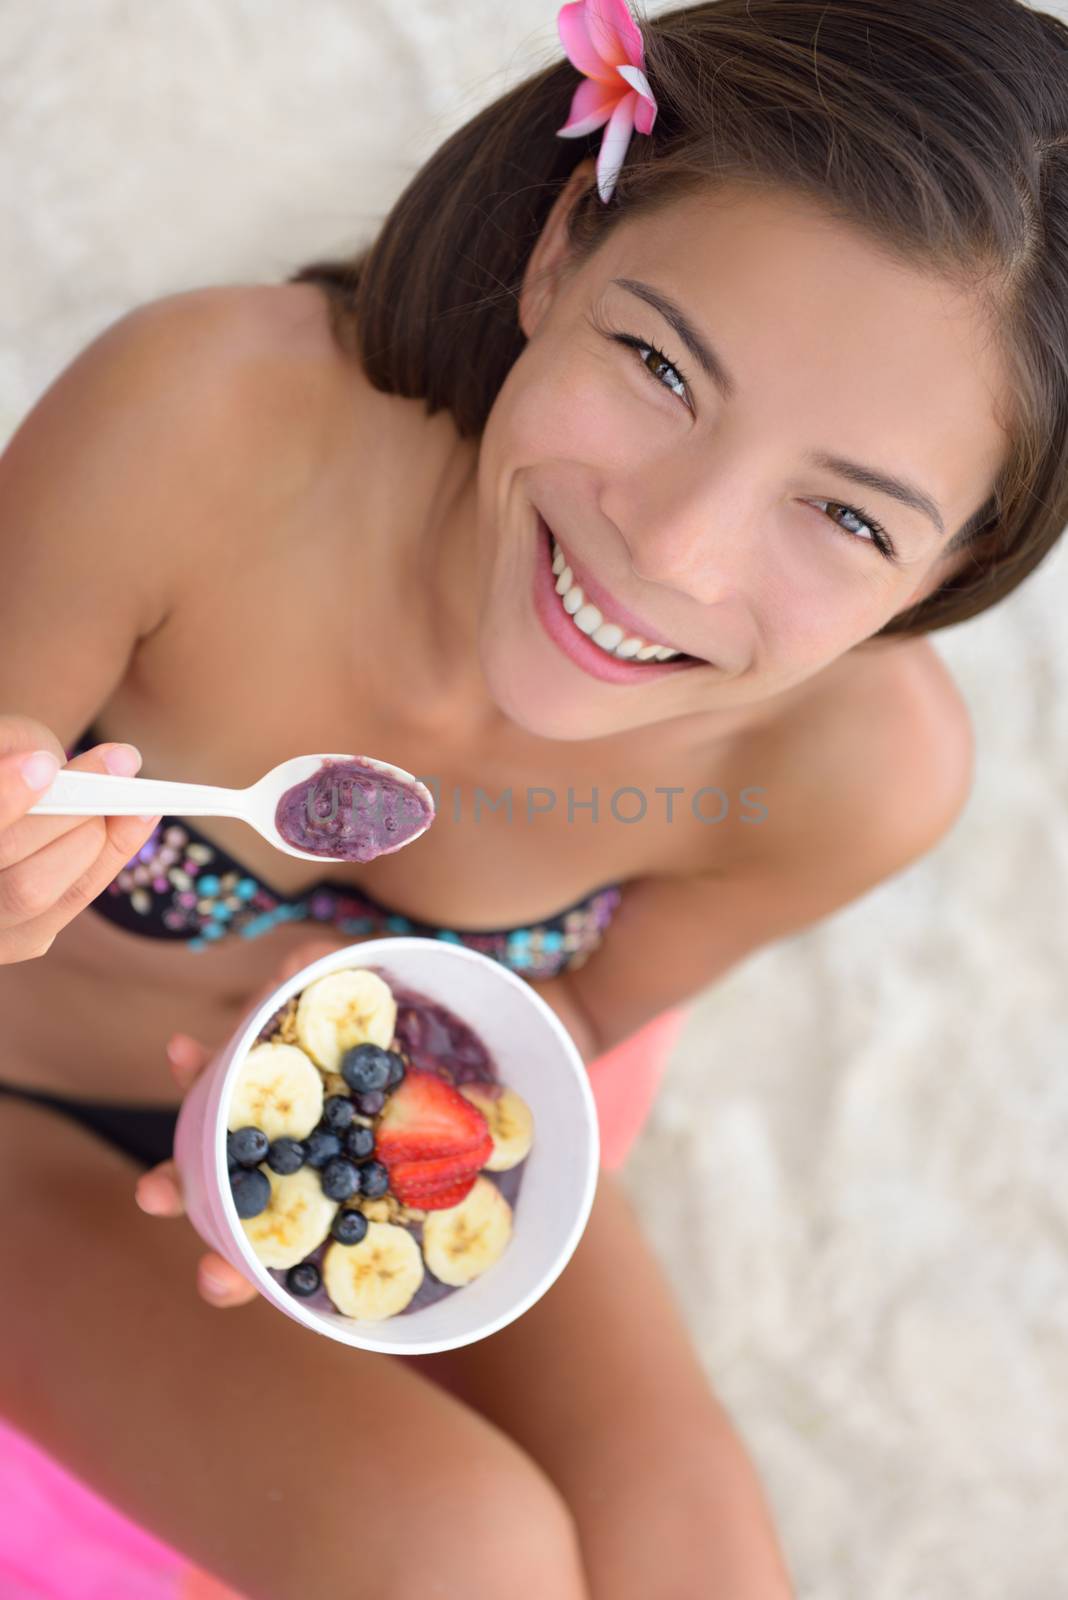 Acai bowl - woman eating healthy food on beach. Girl enjoy acai bowls made from acai berries and fruits outdoors on beach for breakfast. Girl on Hawaii eating local Hawaiian dish.